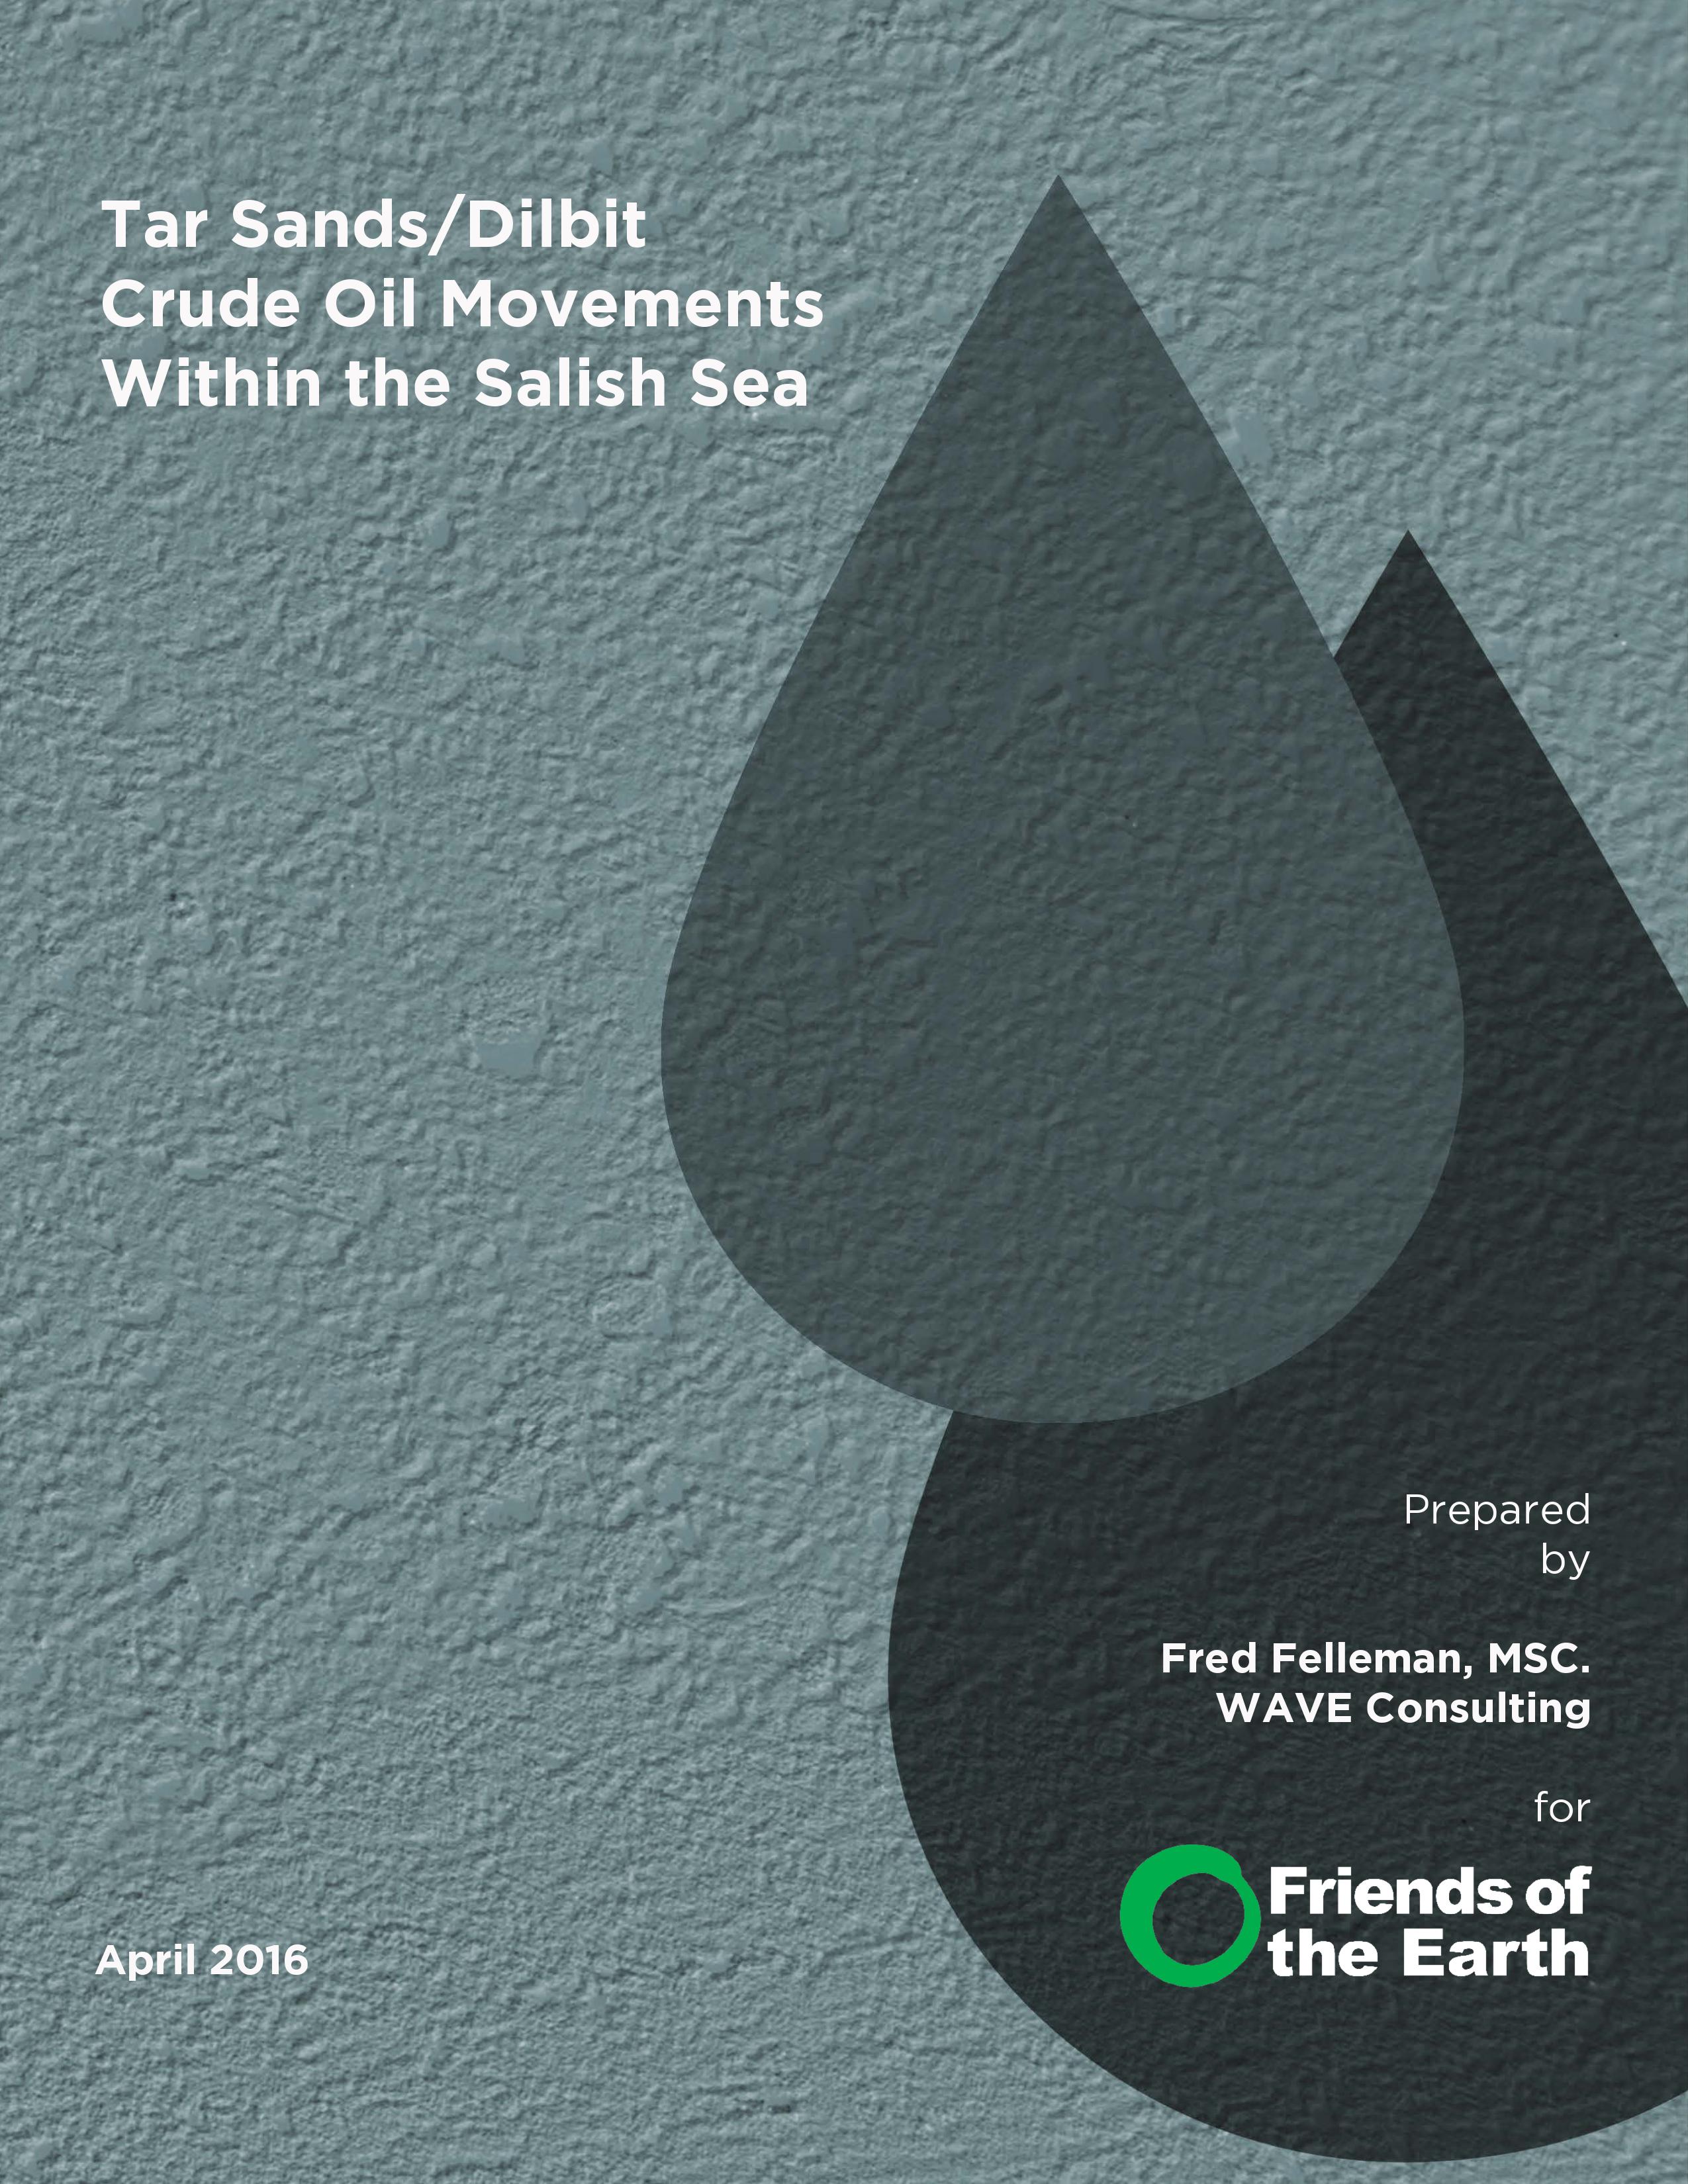 Tar sands/Dilbit Crude Oil Movements Within the Salish Sea